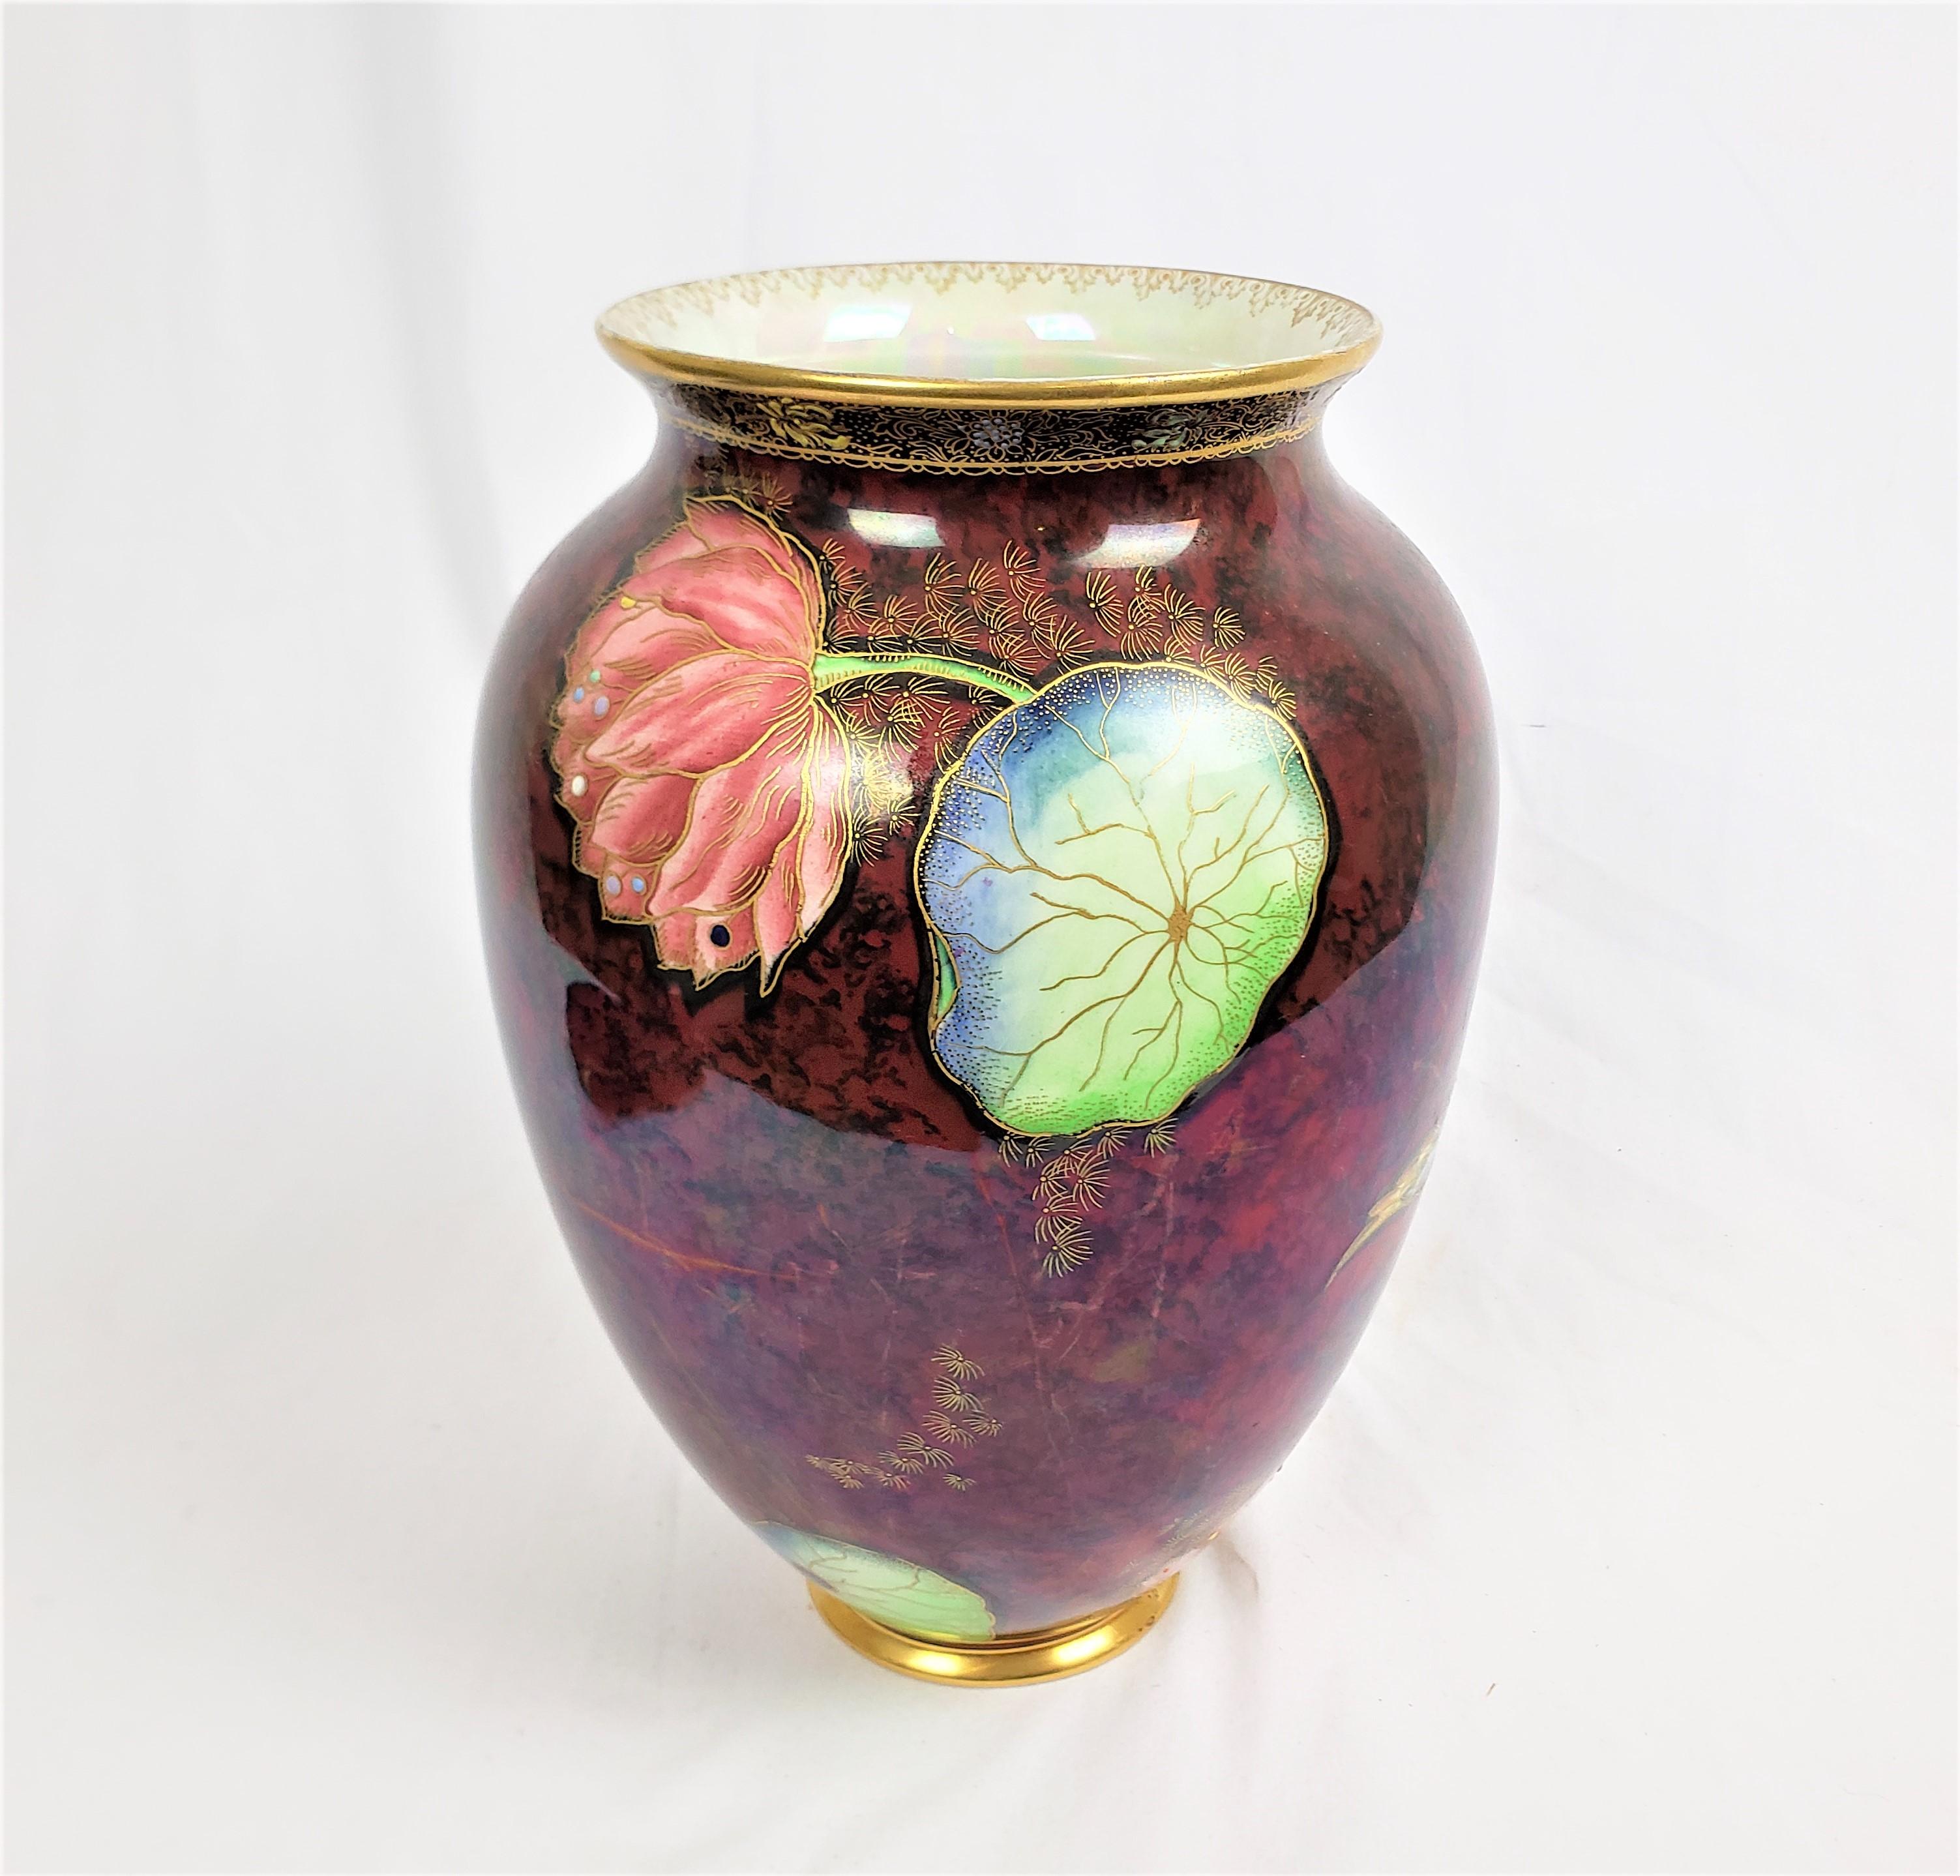 Antique Art Deco Era Carlton Ware Vase with Asian Inspired Decoration 1